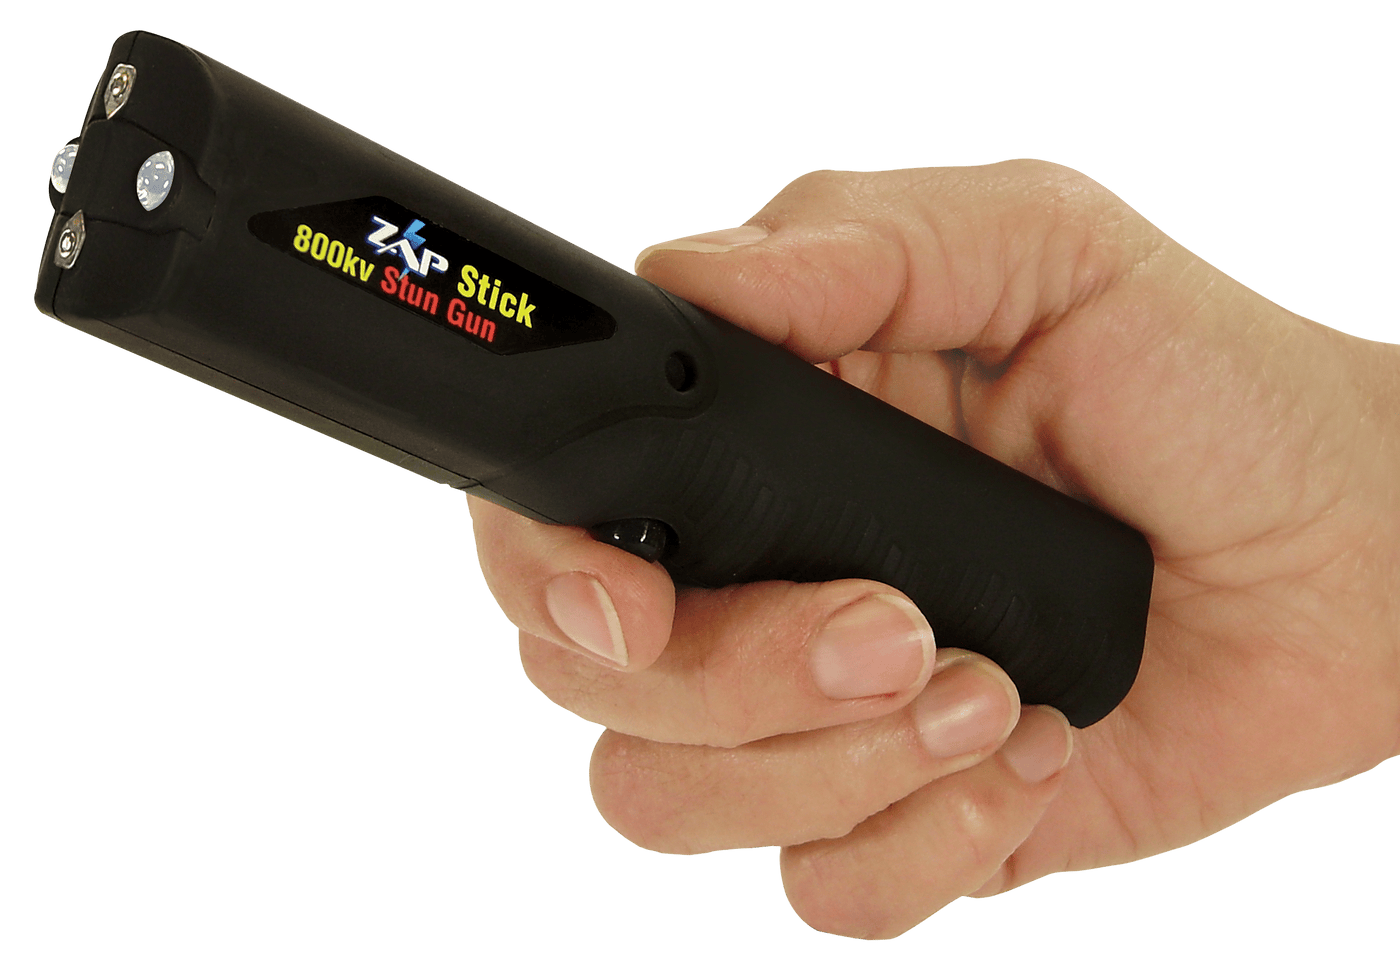 Zap Psp Zap Stun Zap Stick Black - W/flashlight 800000 Volts Accessories